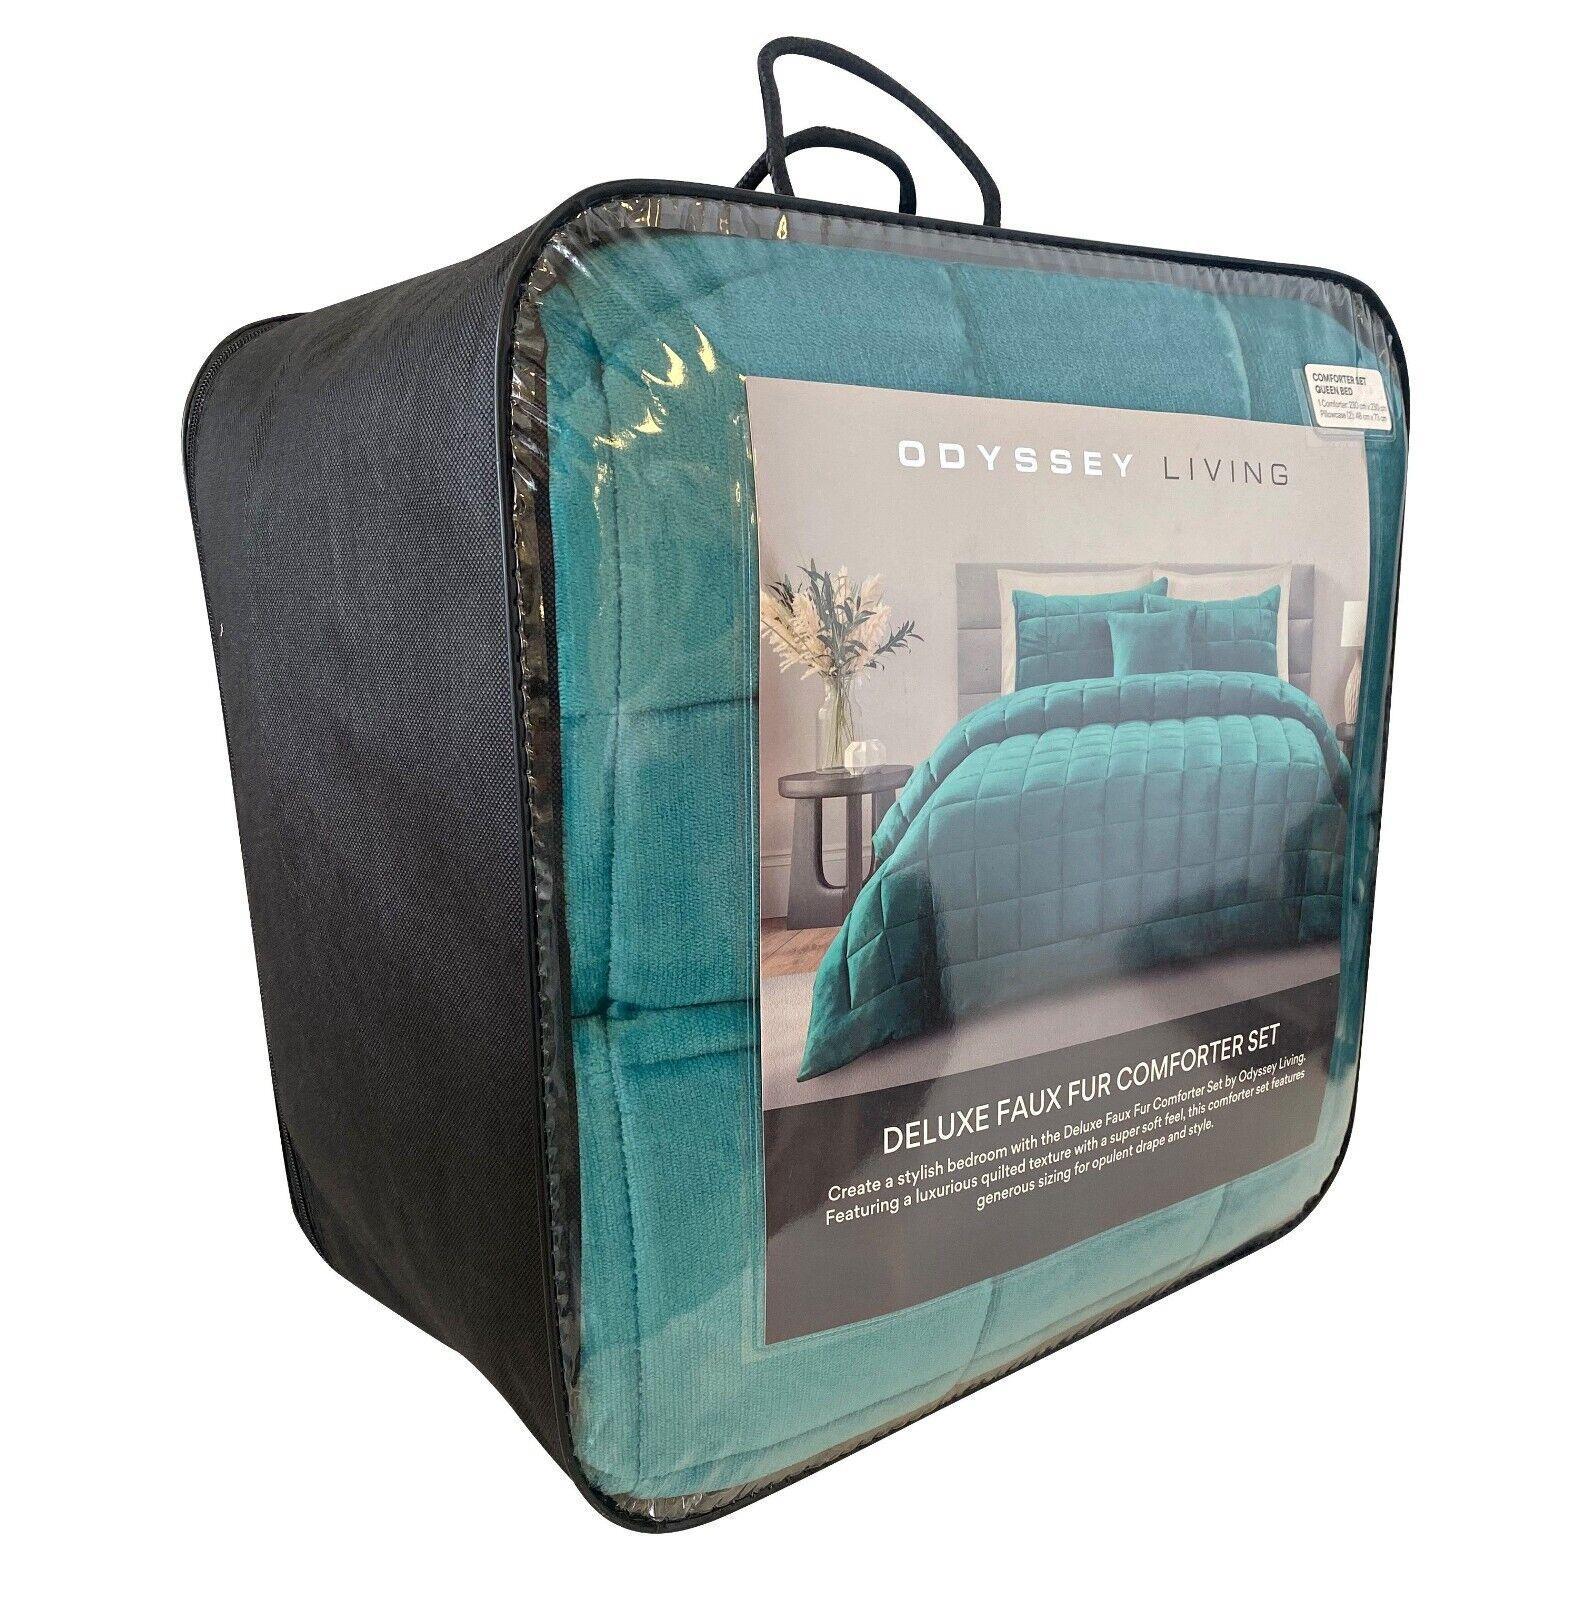 Odyssey Living Deluxe Faux Fur Comforter Set - Emerald